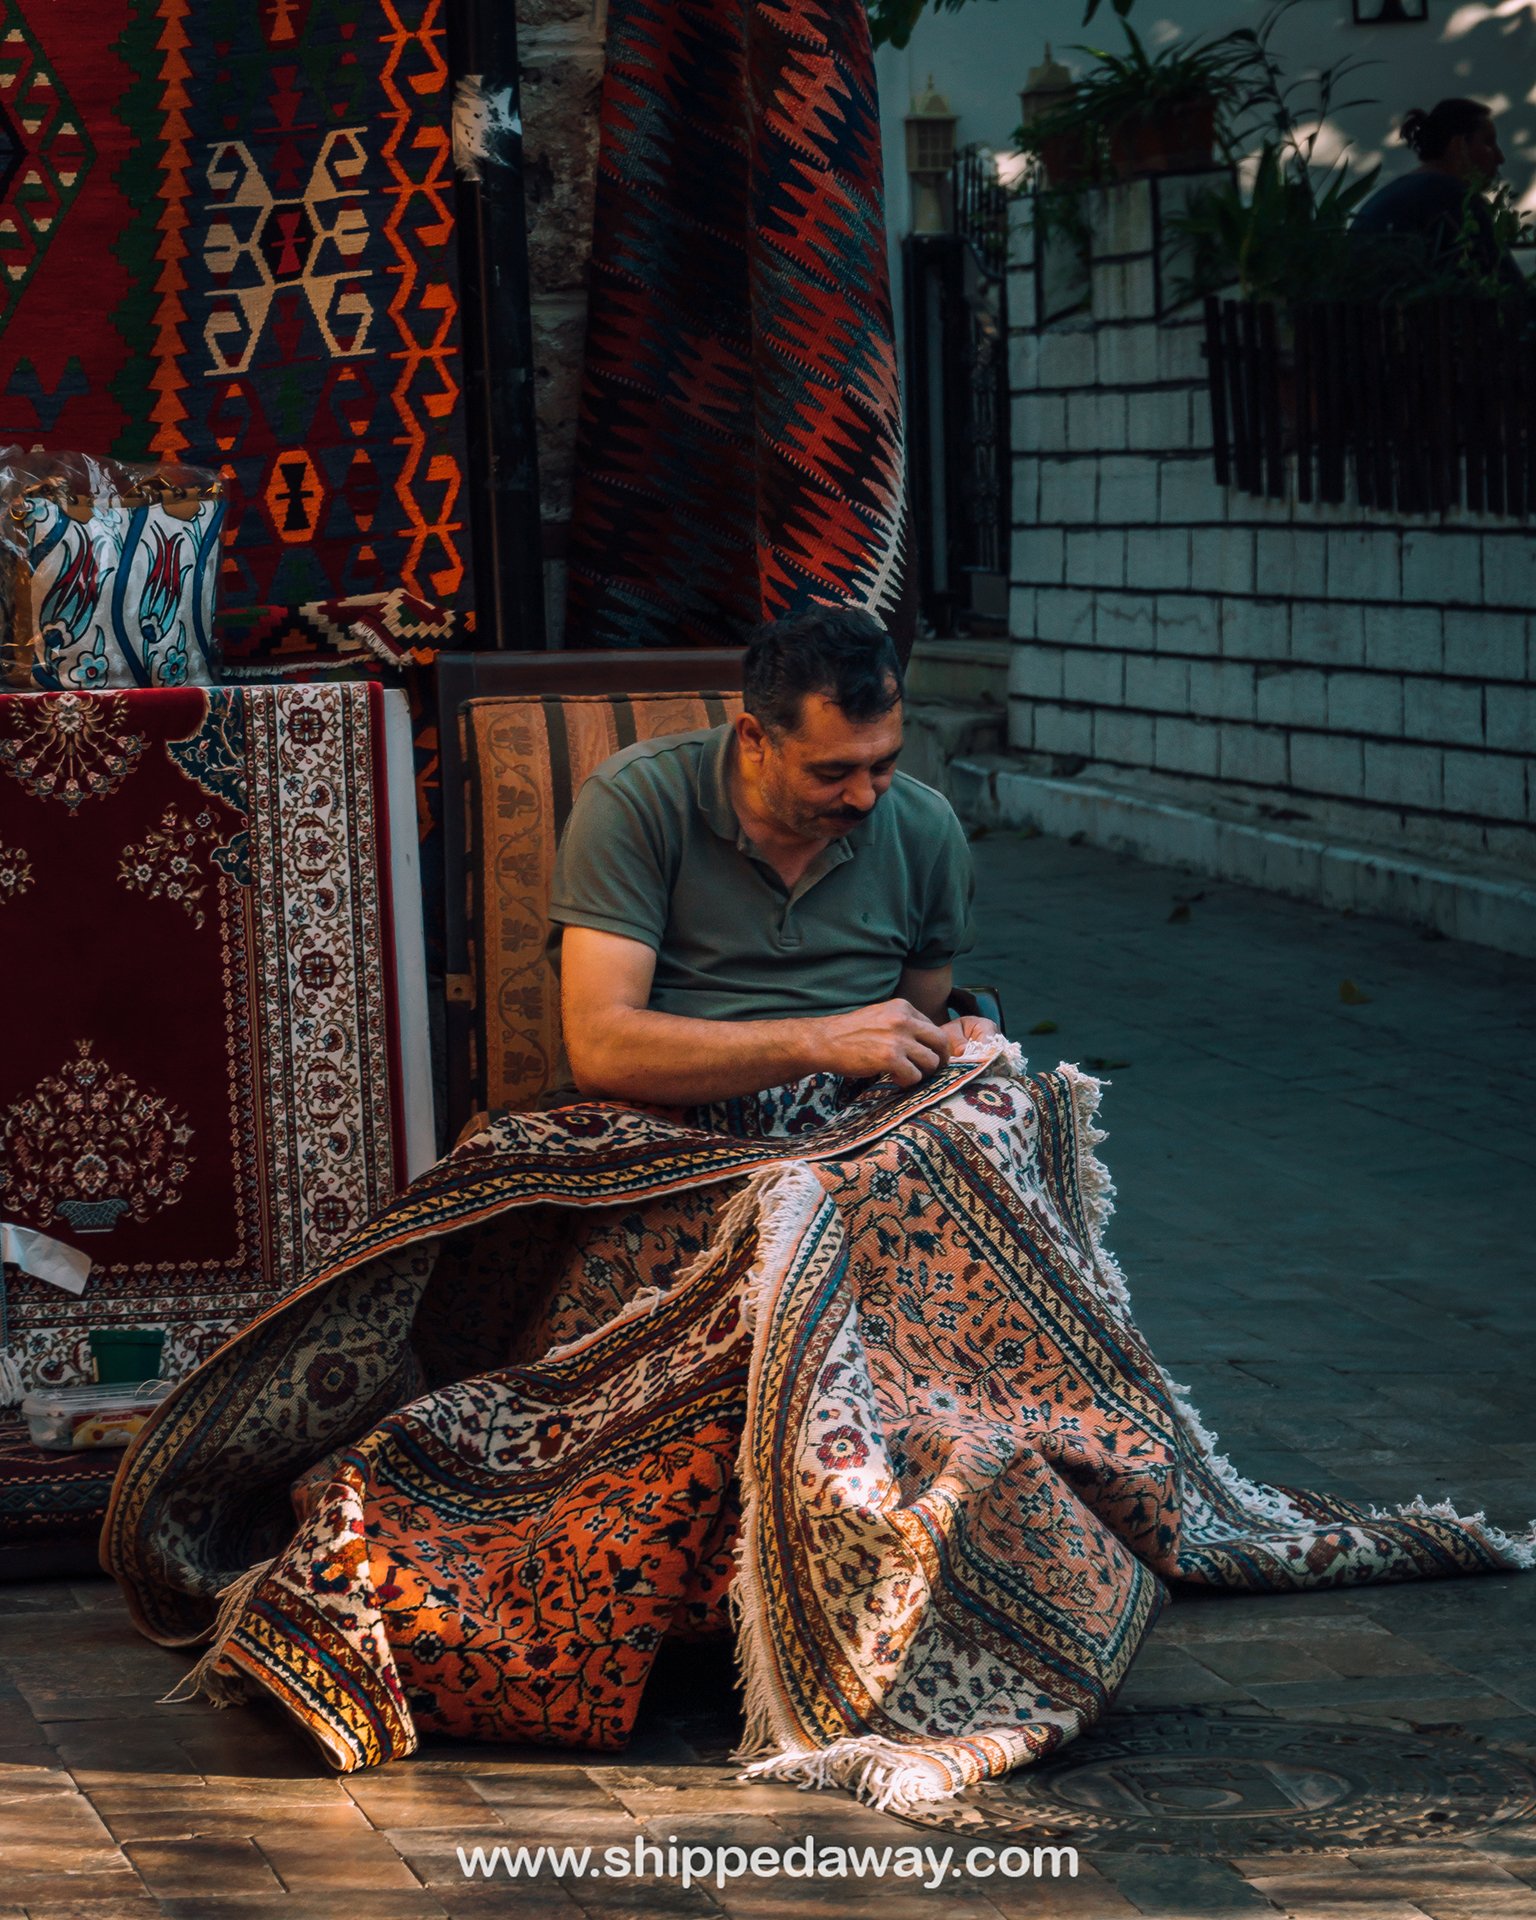 Making carpets in Antalya, Turkey